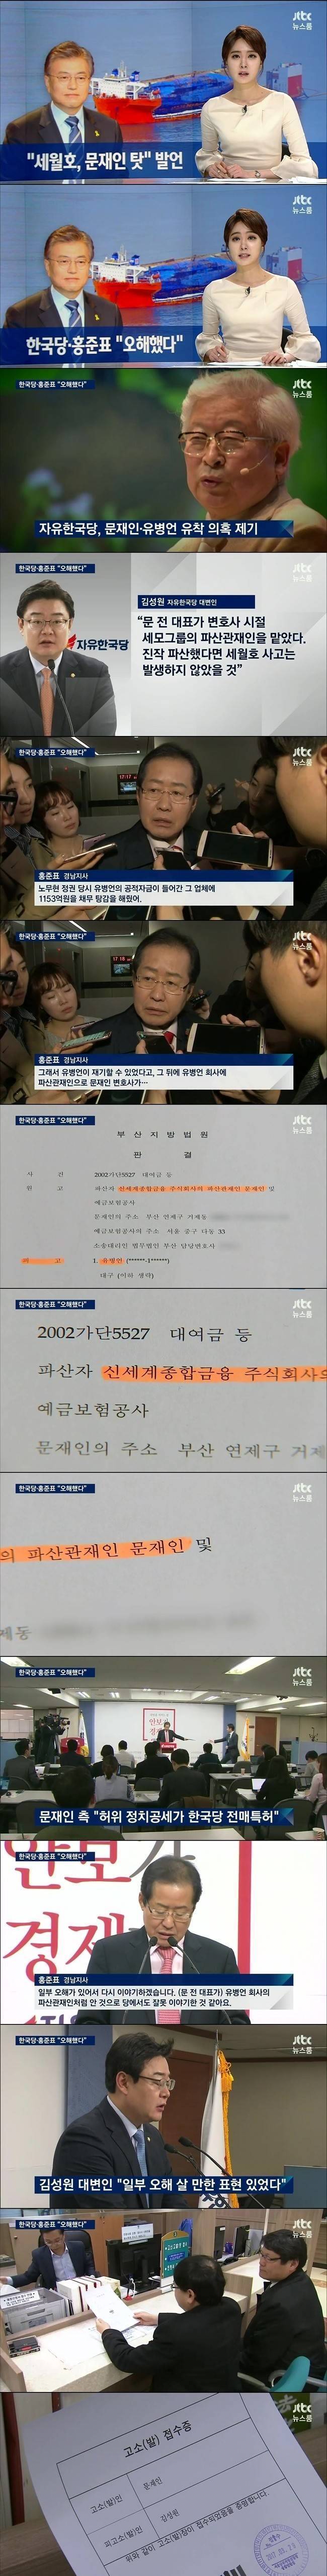 [JTBC] 팩트체크 :"세월호, 문재인 탓""오해다".JPG | 인스티즈